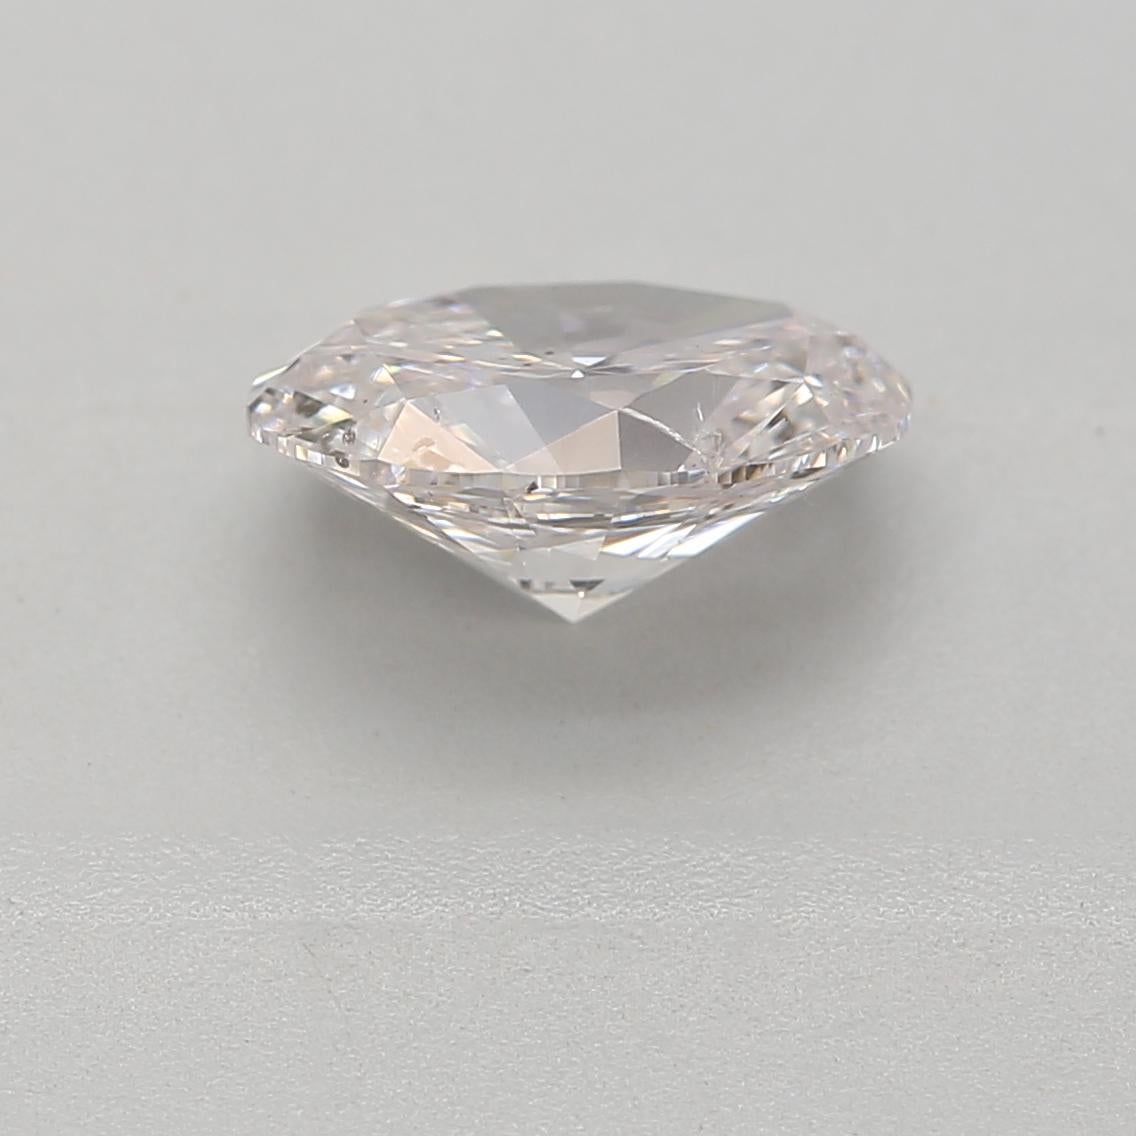 Diamant certifié GIA de 0,72 carat de taille ovale rose pâle I1 Clarity Neuf - En vente à Kowloon, HK